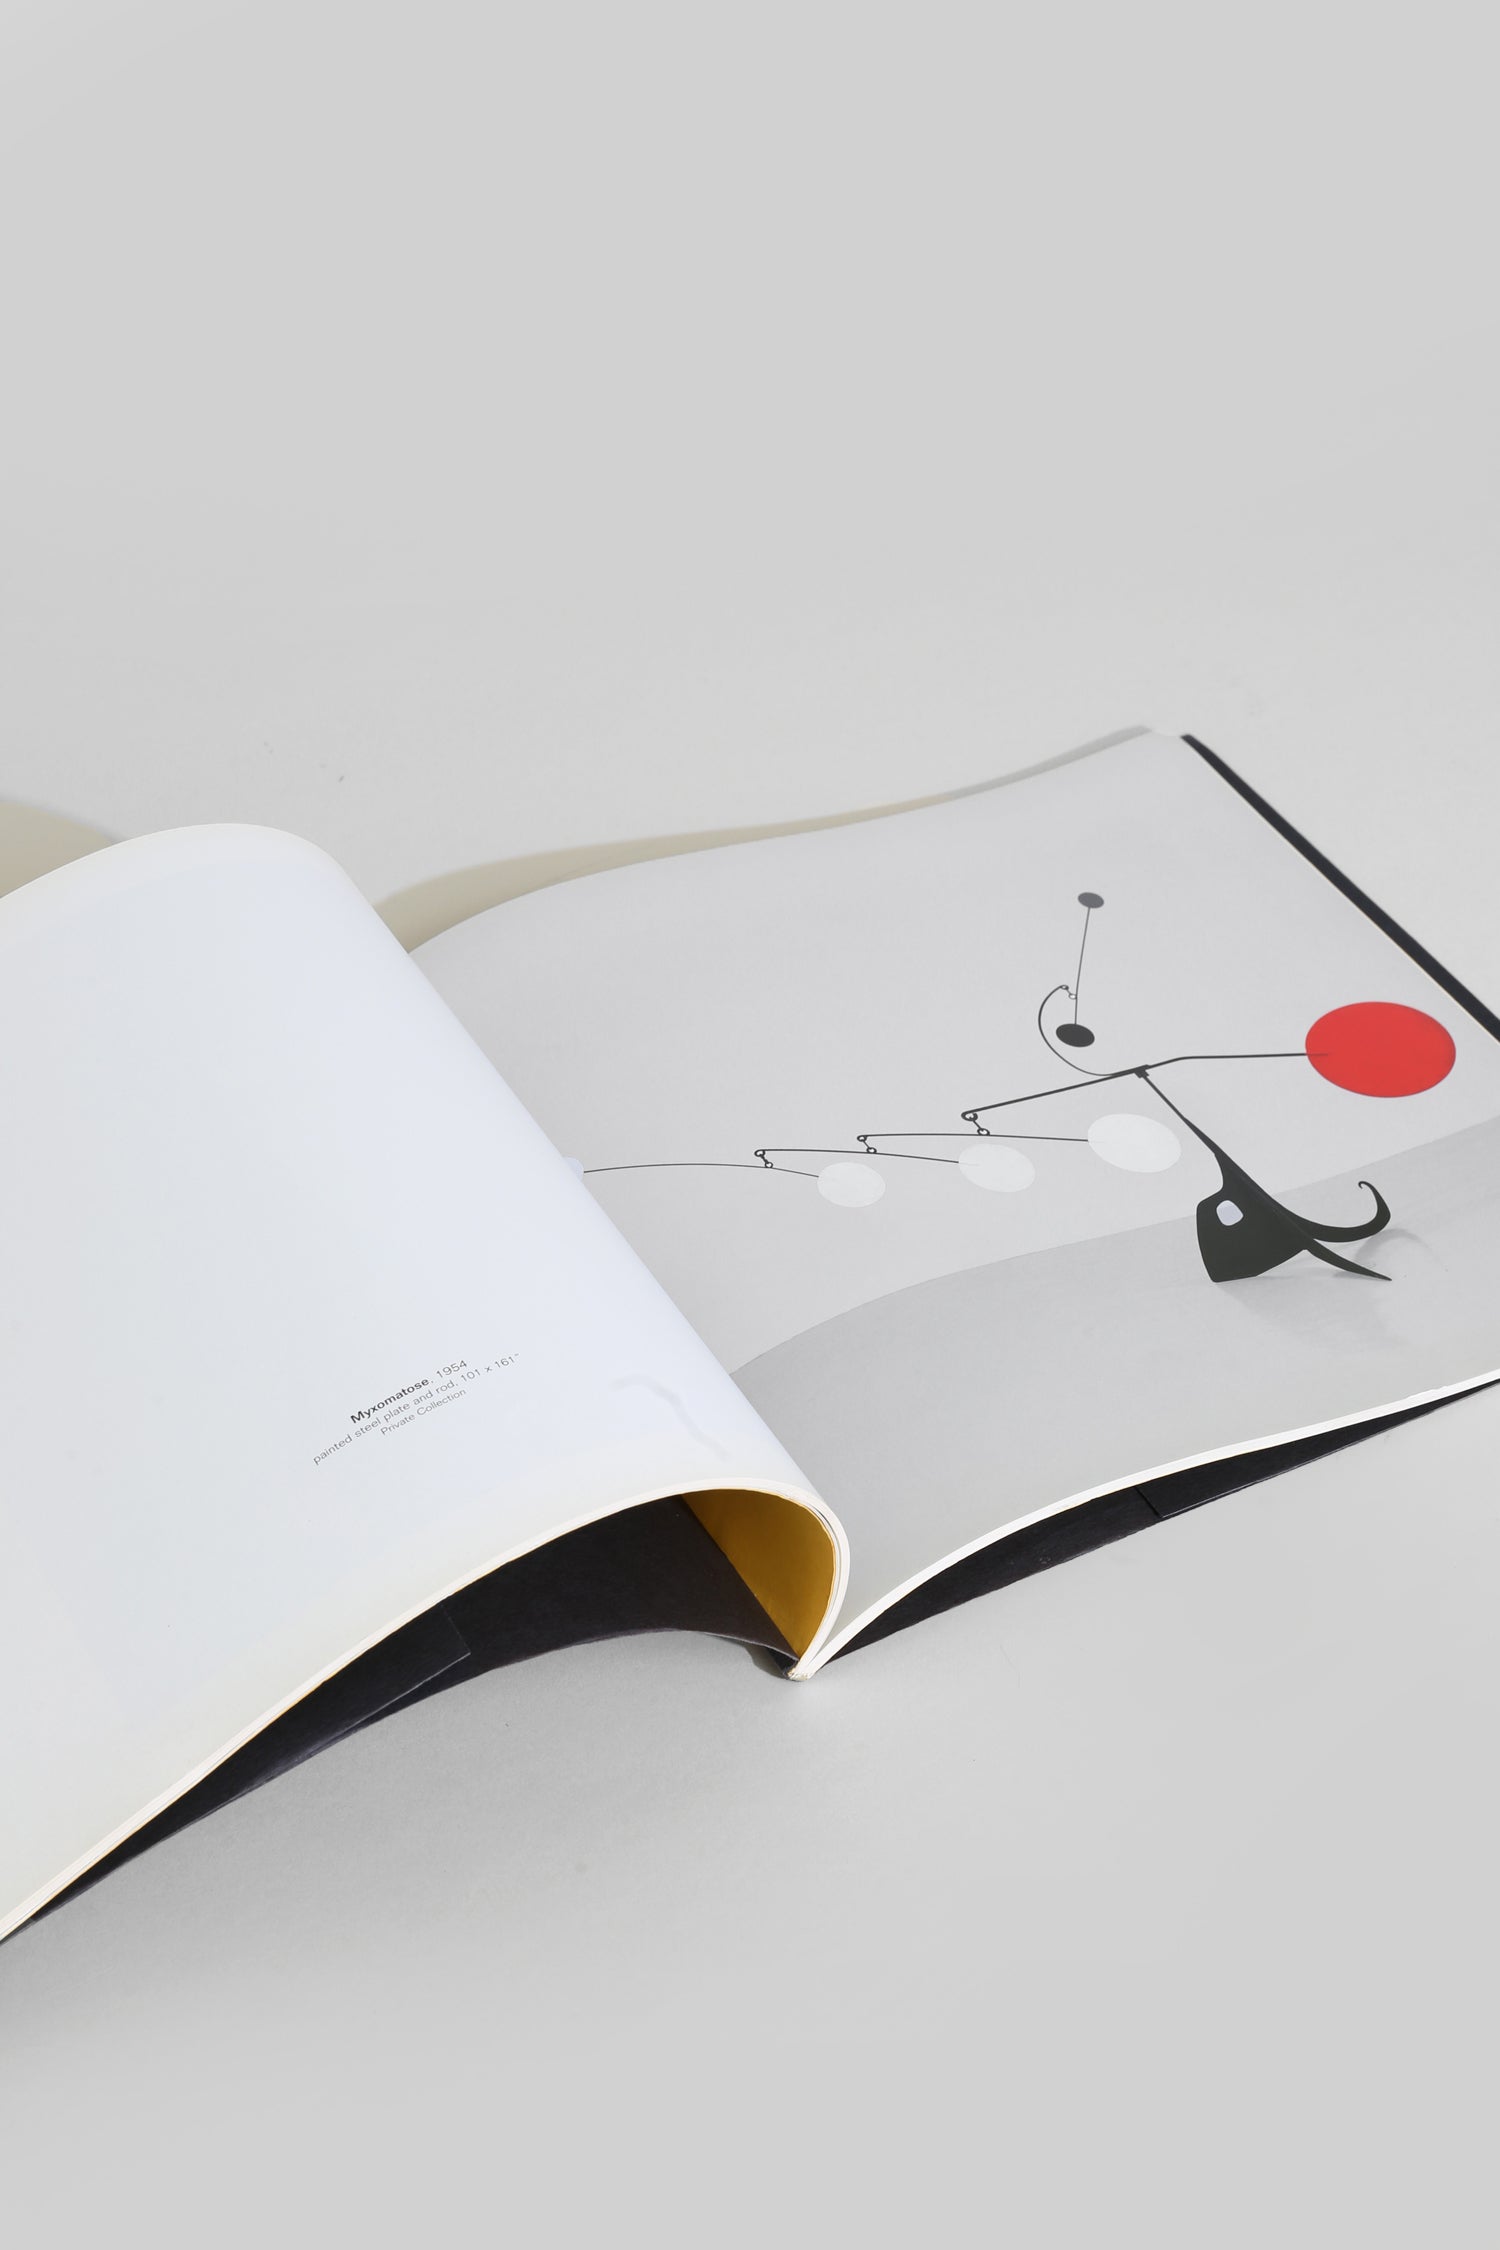 Alexander Calder, The 50's Book